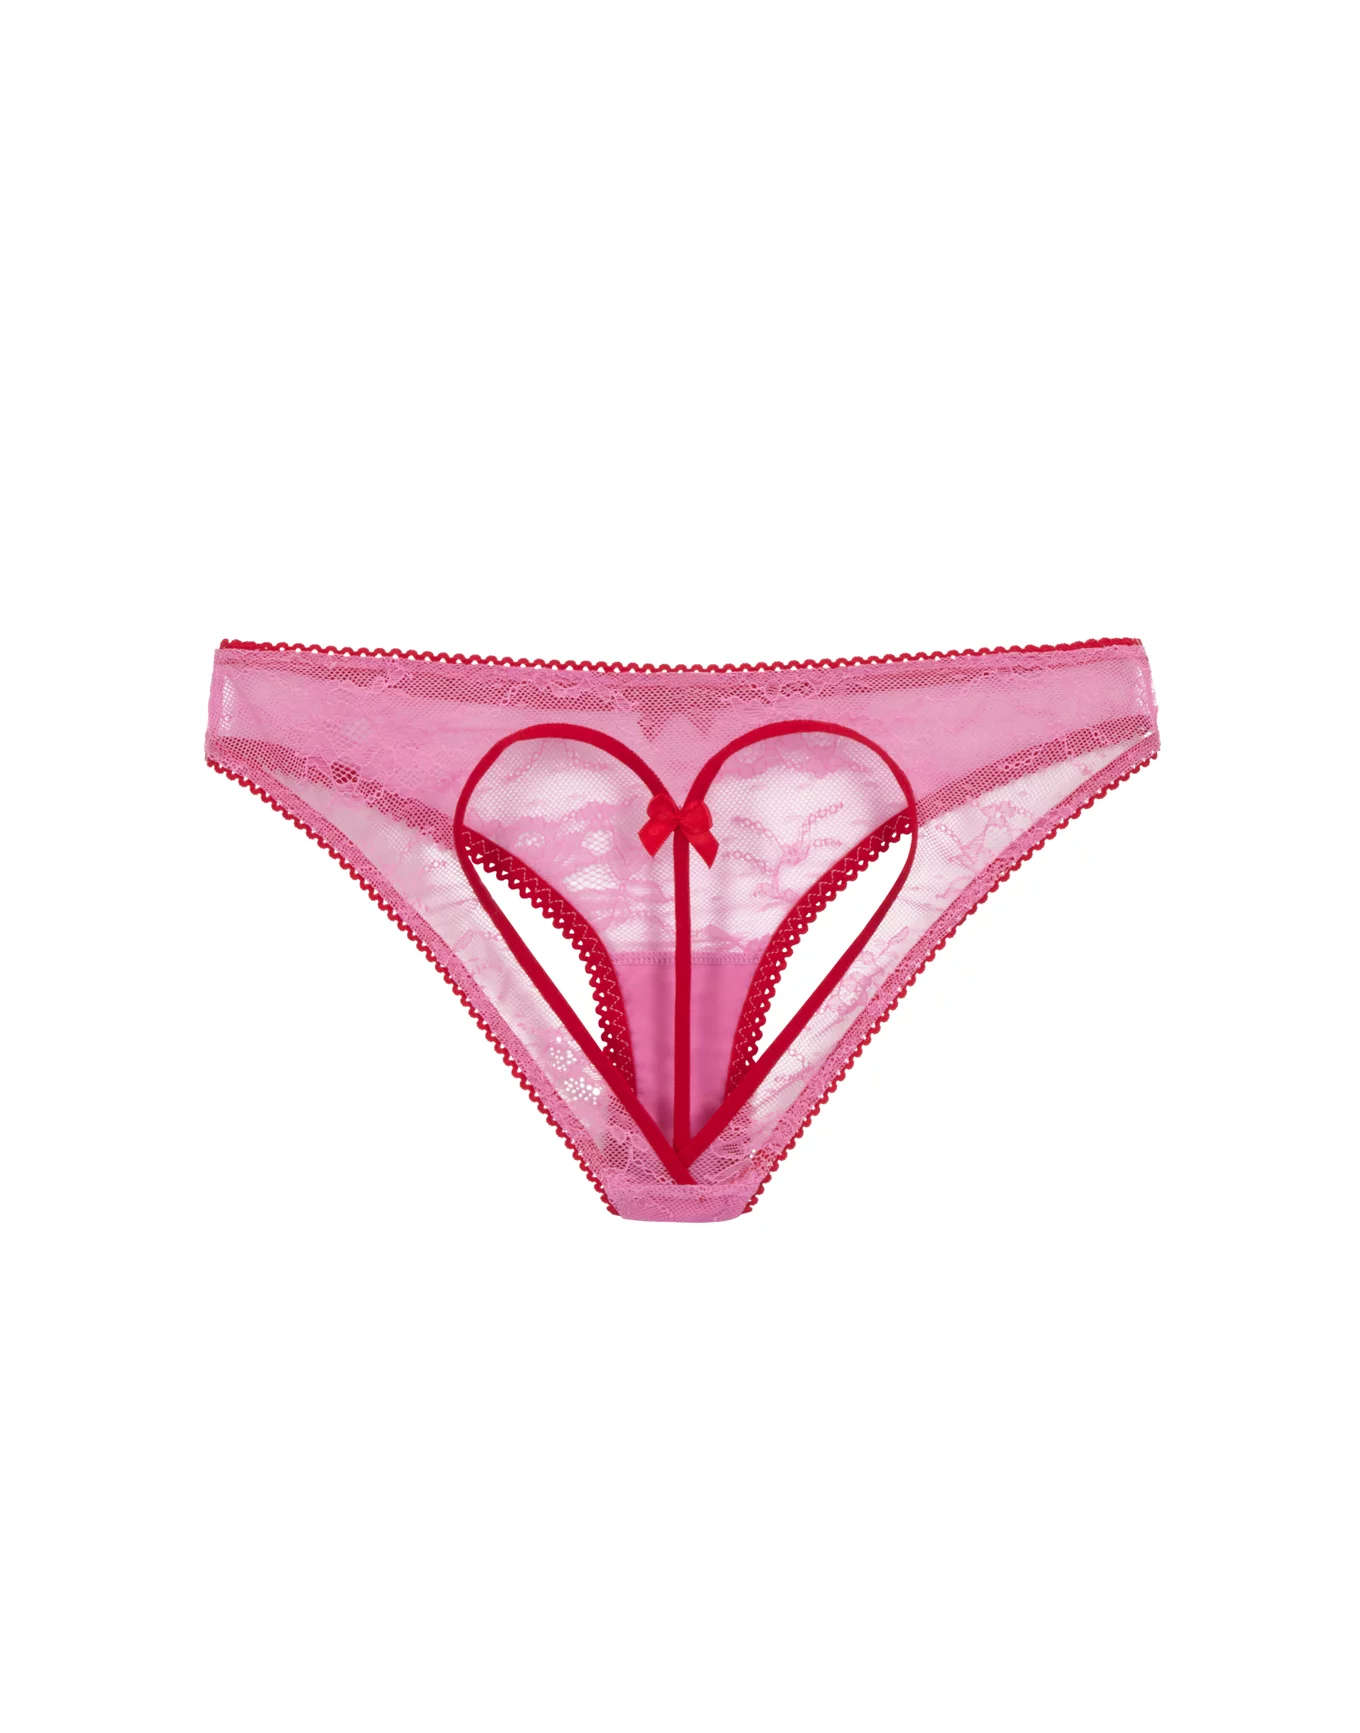 Red Hearts Women Thongs, High-cut Briefs Panties Cheeky Underwear